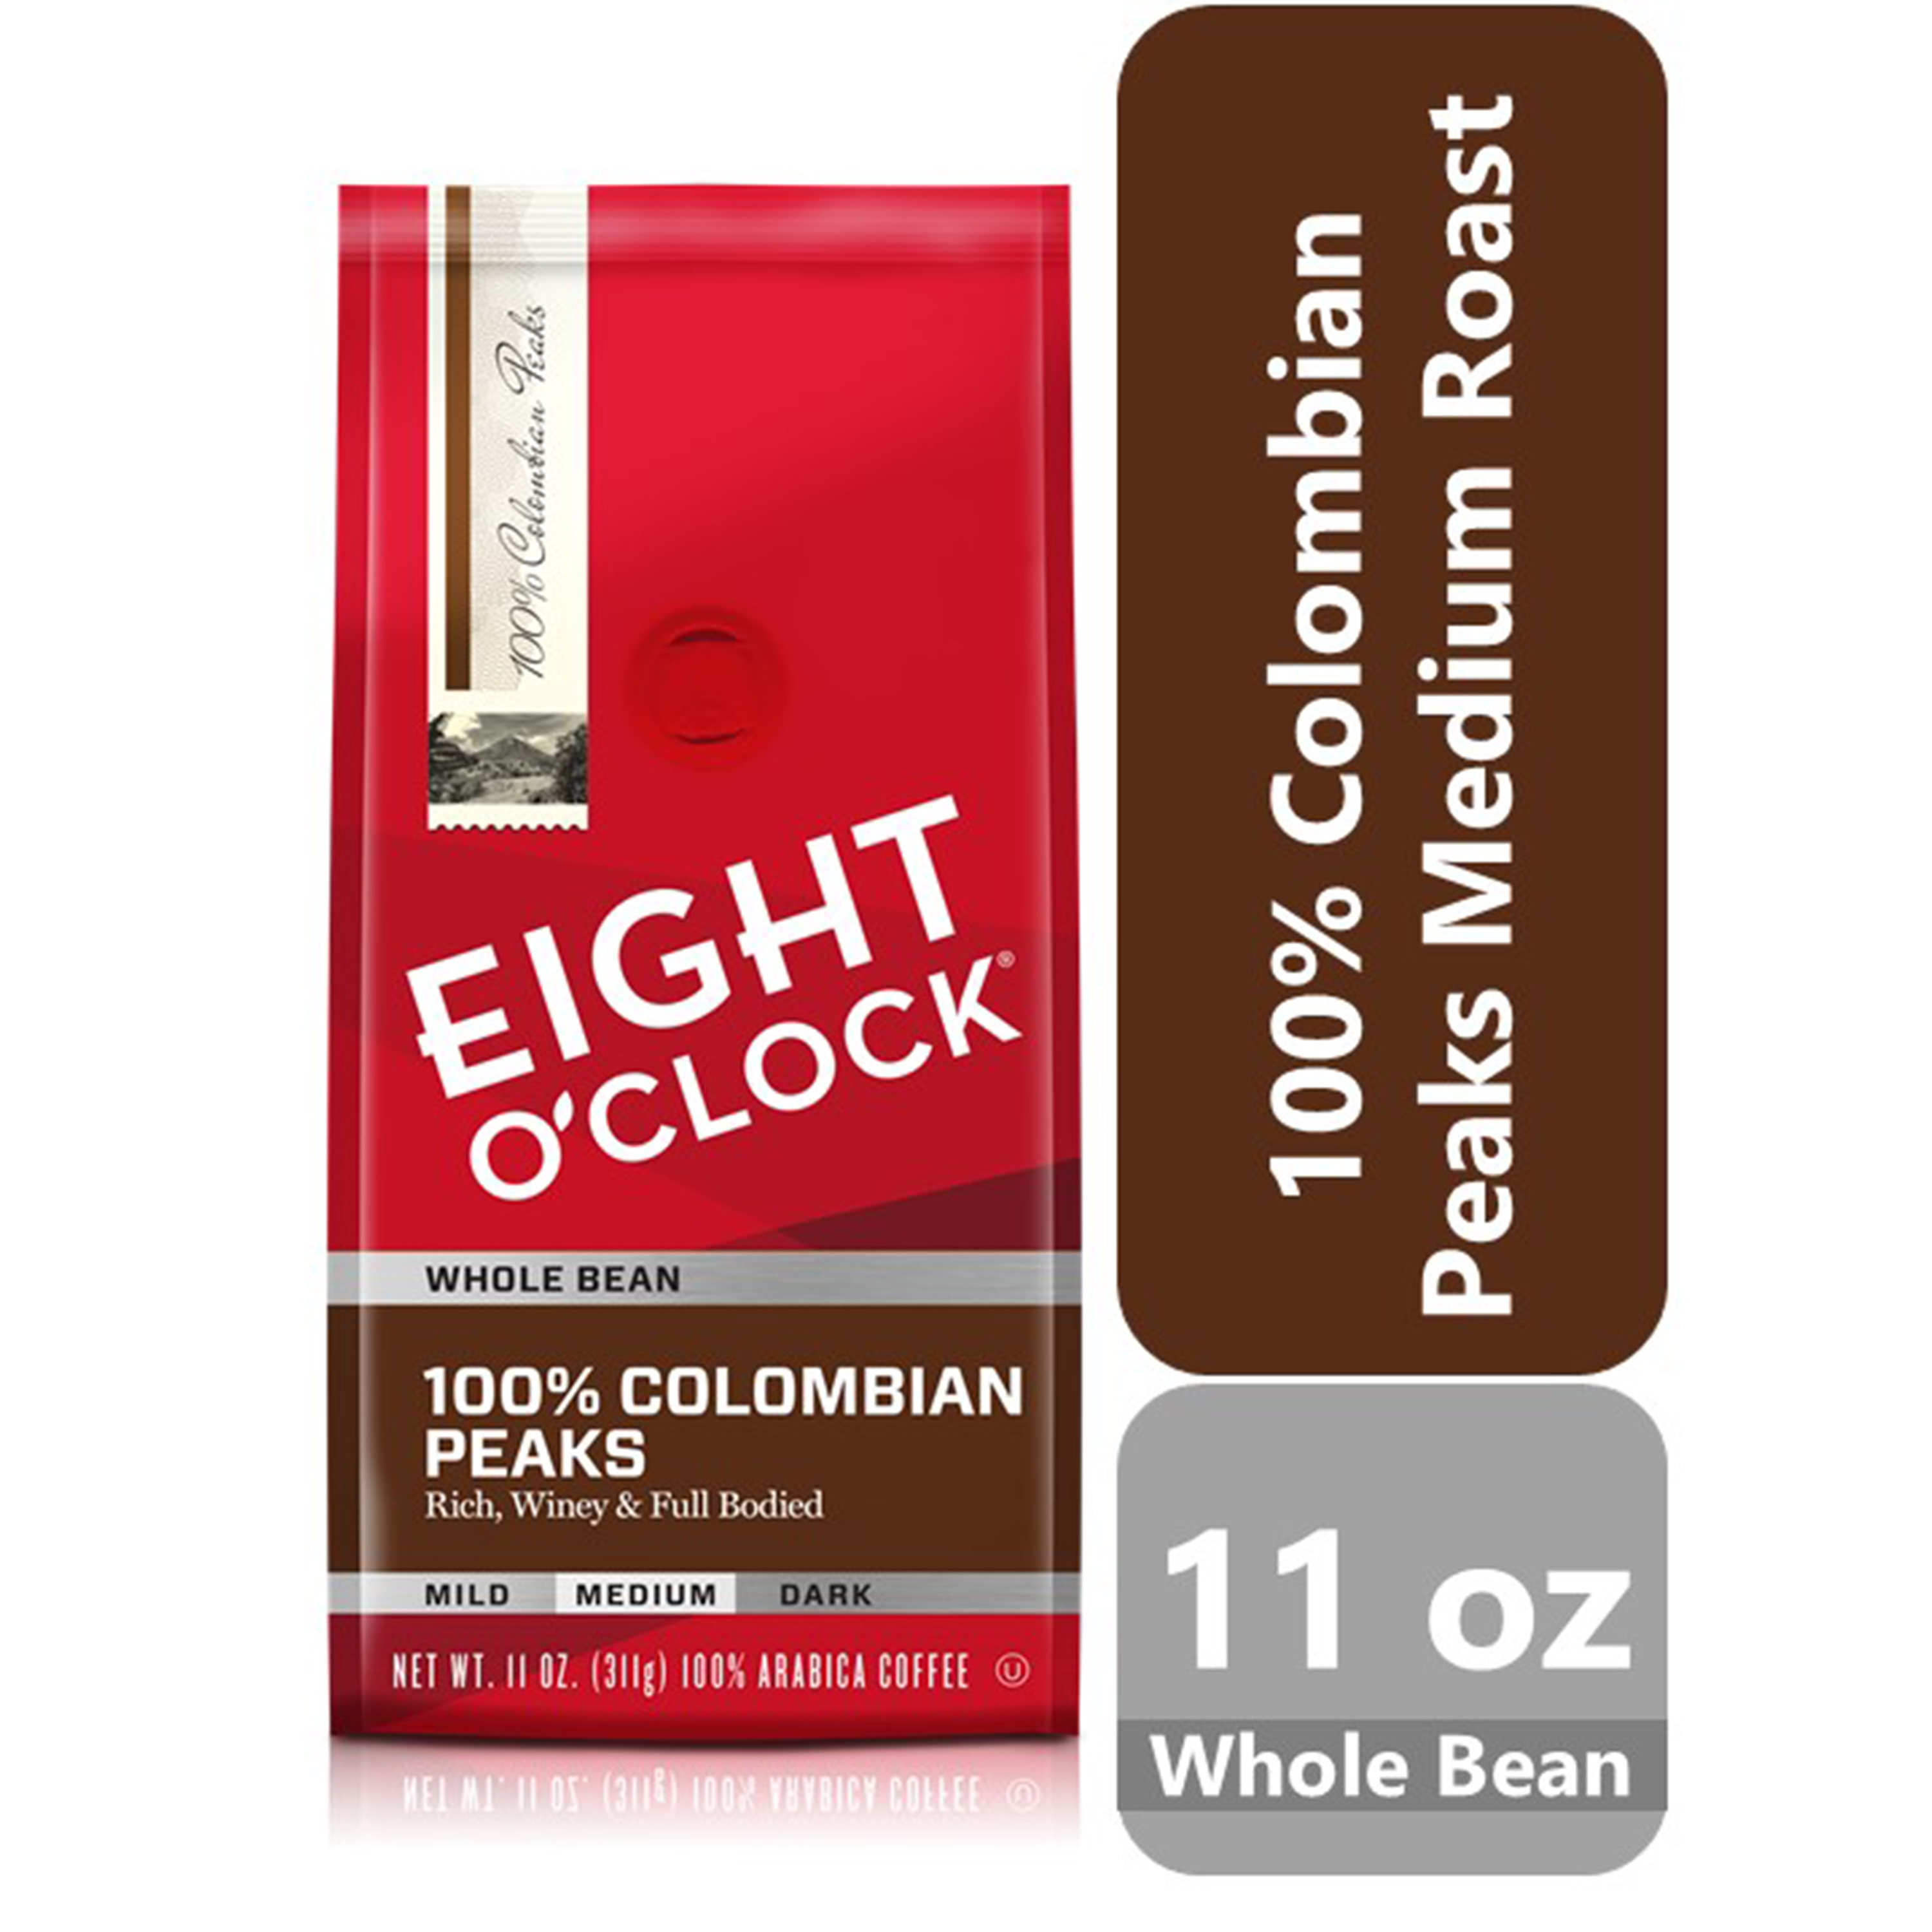 Eight O'Clock 100% Colombian Peaks Medium Roast Whole Bean Coffee 11 Oz. Bag - image 1 of 12